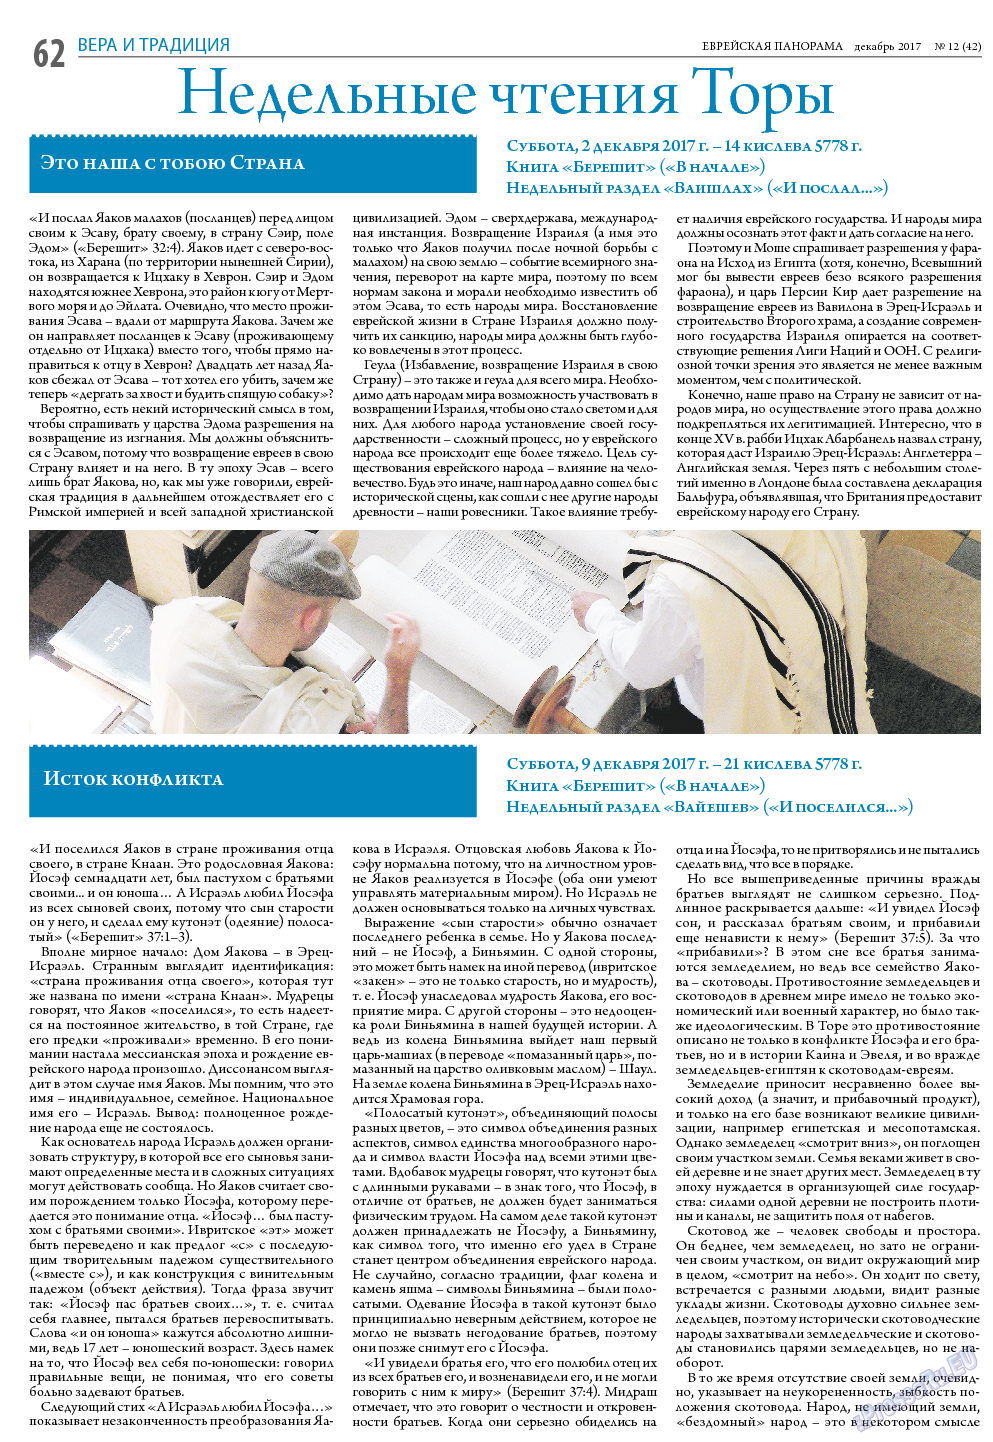 Еврейская панорама, газета. 2017 №12 стр.62